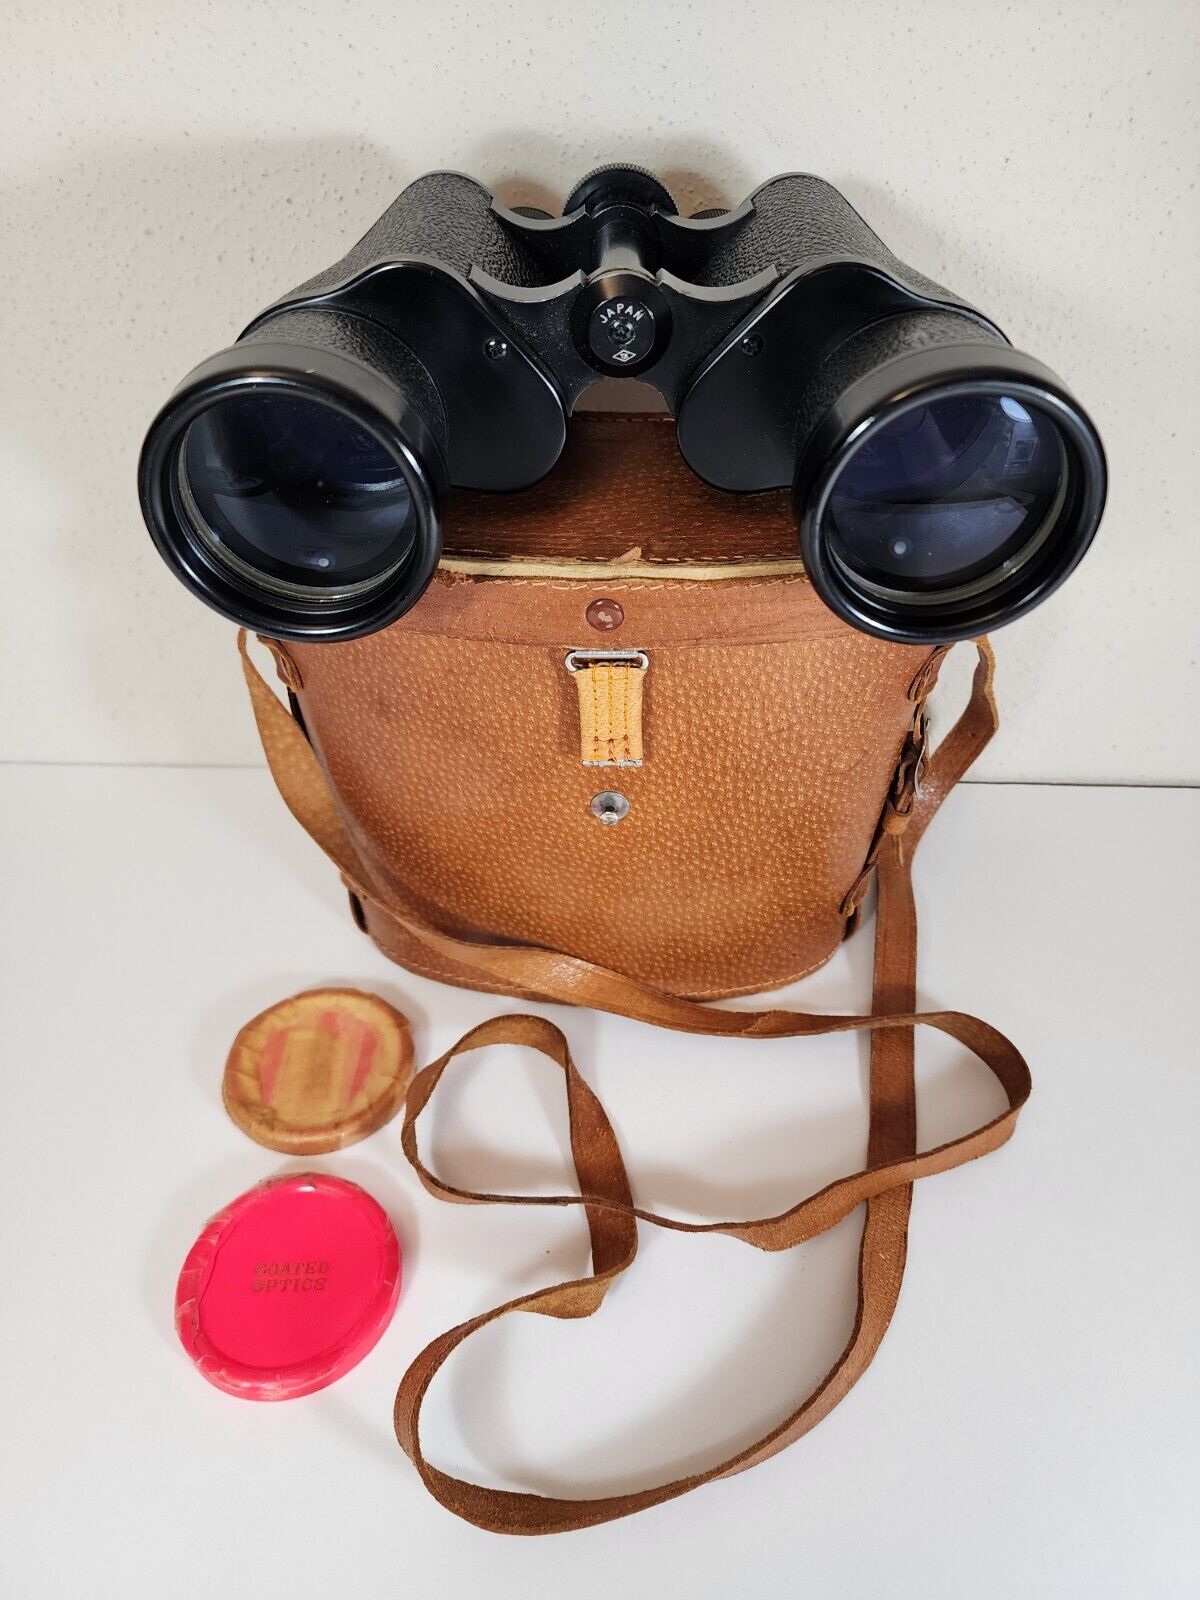 Vintage Tasco Binoculars Model 306 7x50 372FT at 1000 Yards w Original Case/Caps